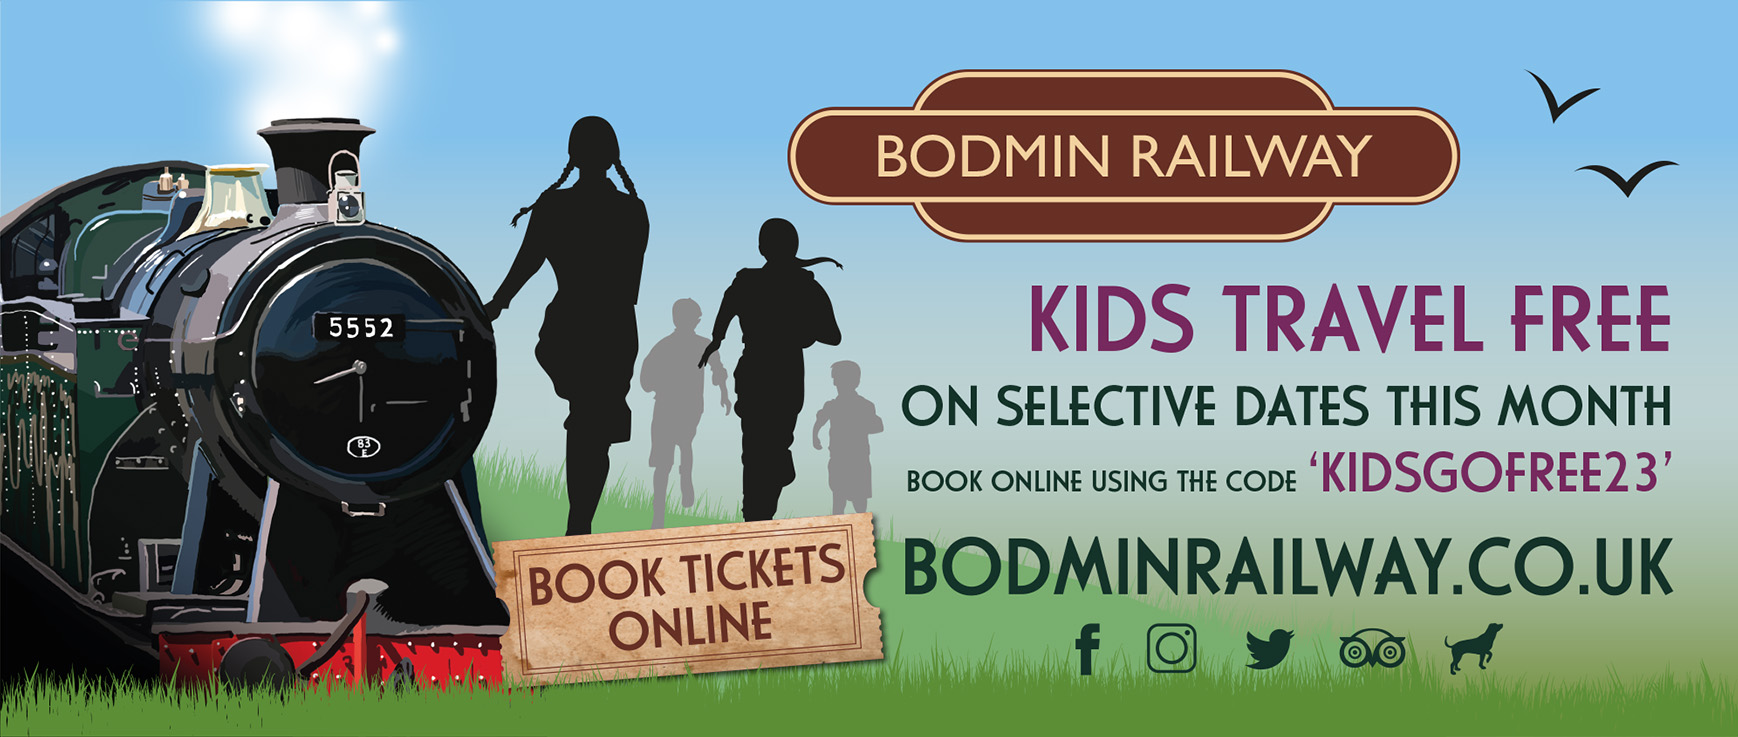 Children go free in February half term at Bodmin Railway